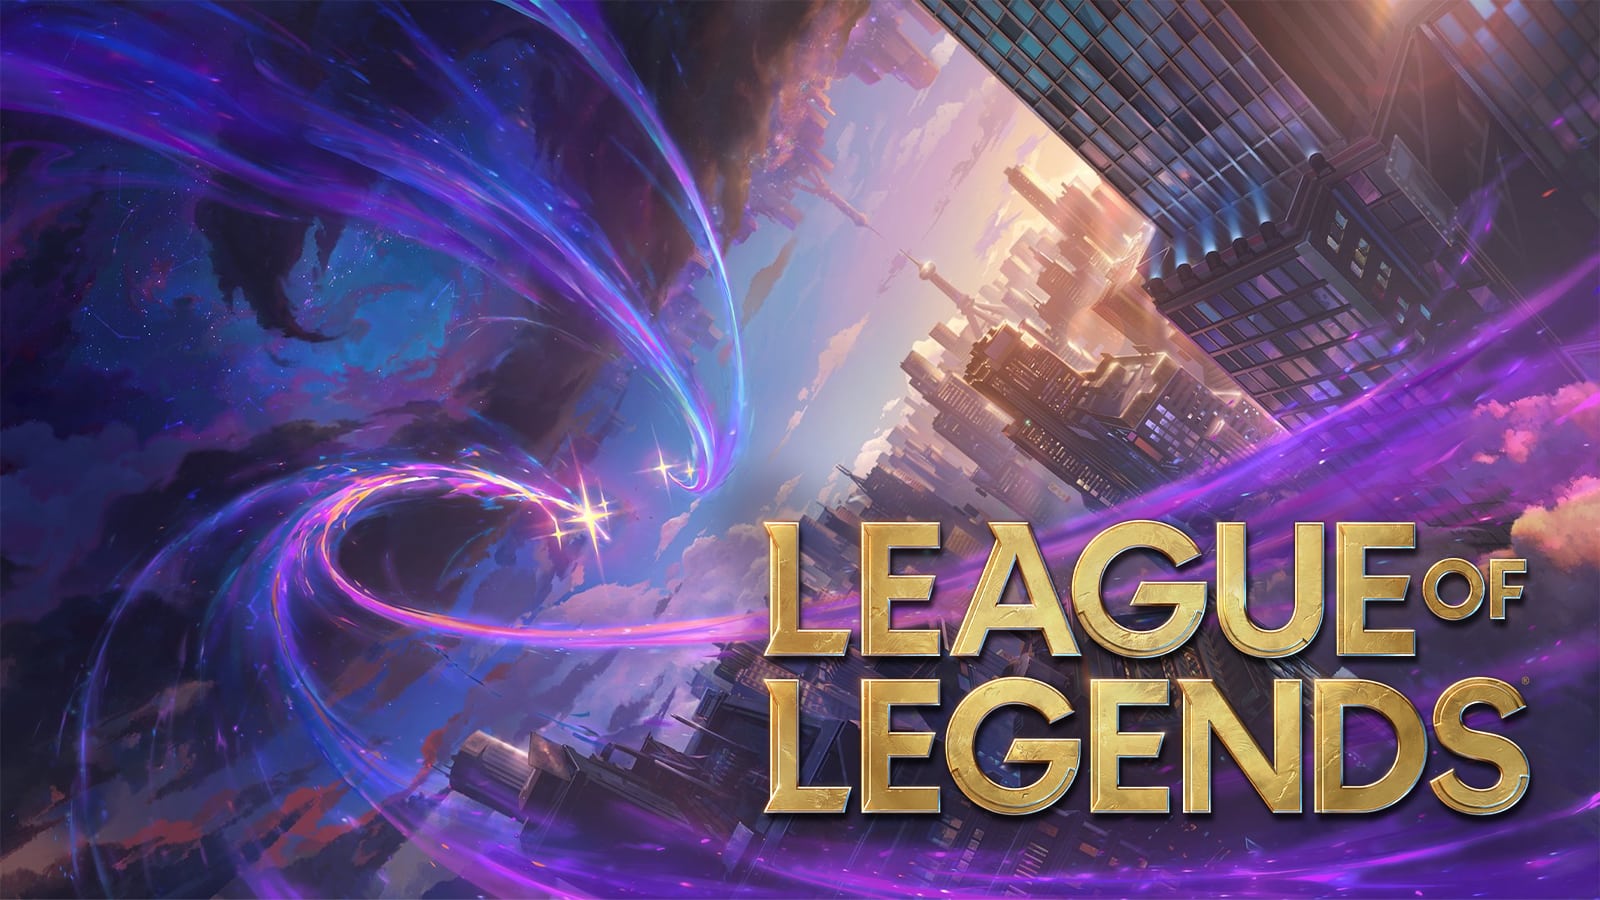 Star Guardian 2022 event teaser in League of Legends